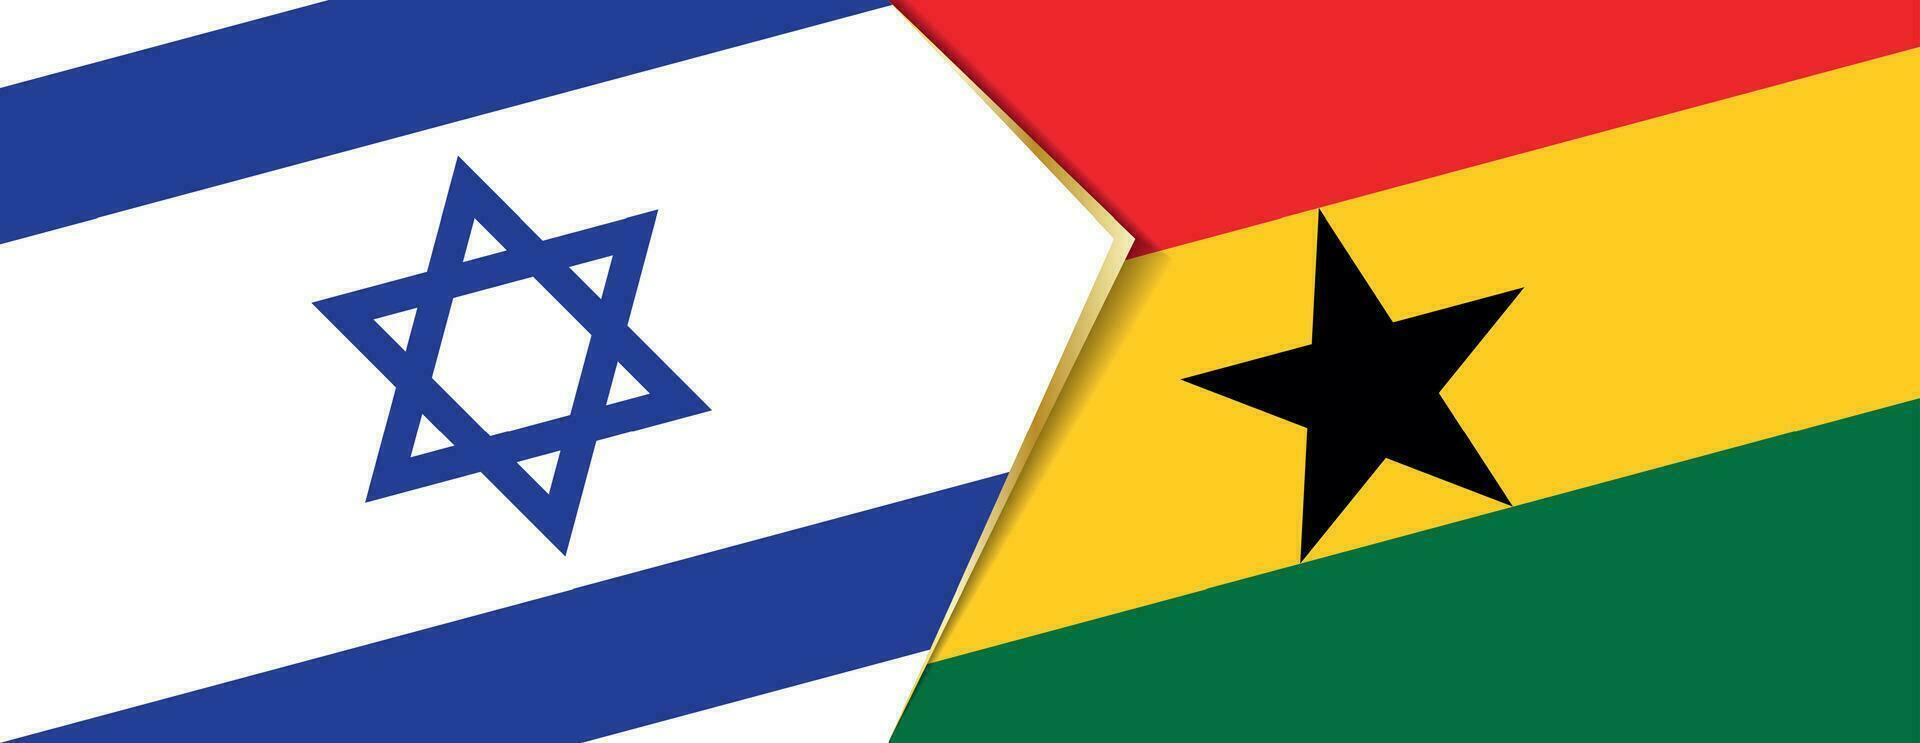 Israele e Ghana bandiere, Due vettore bandiere.